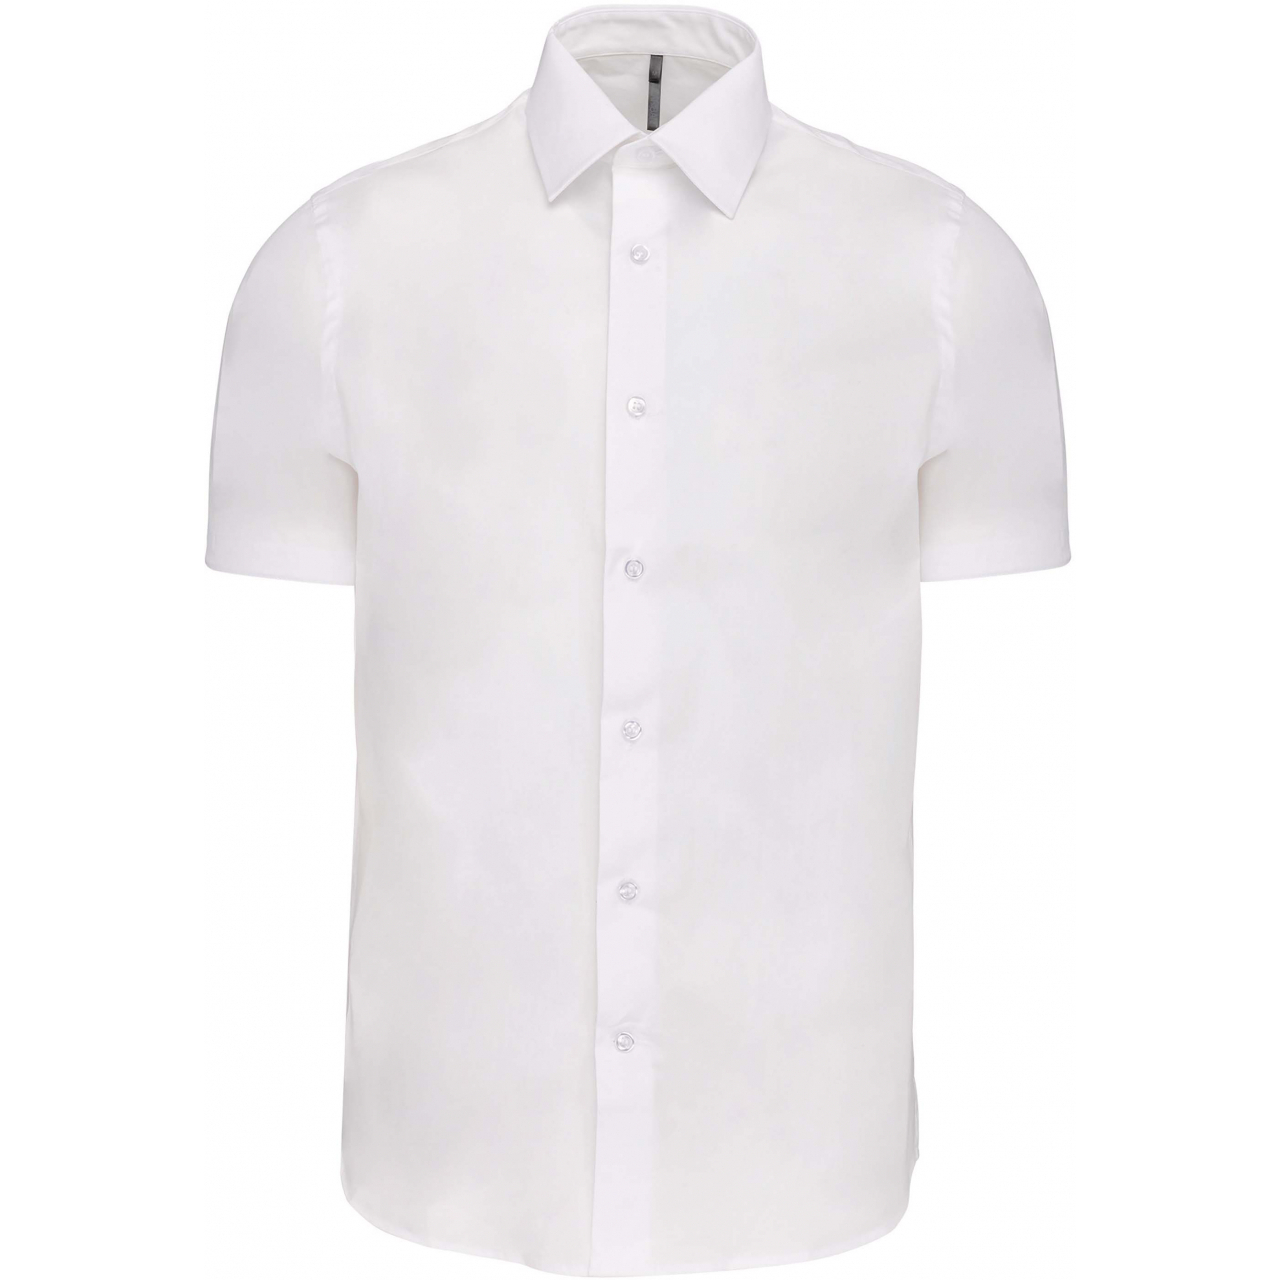 Pánská košile s krátkým rukávem Kariban strečová - bílá, XXL